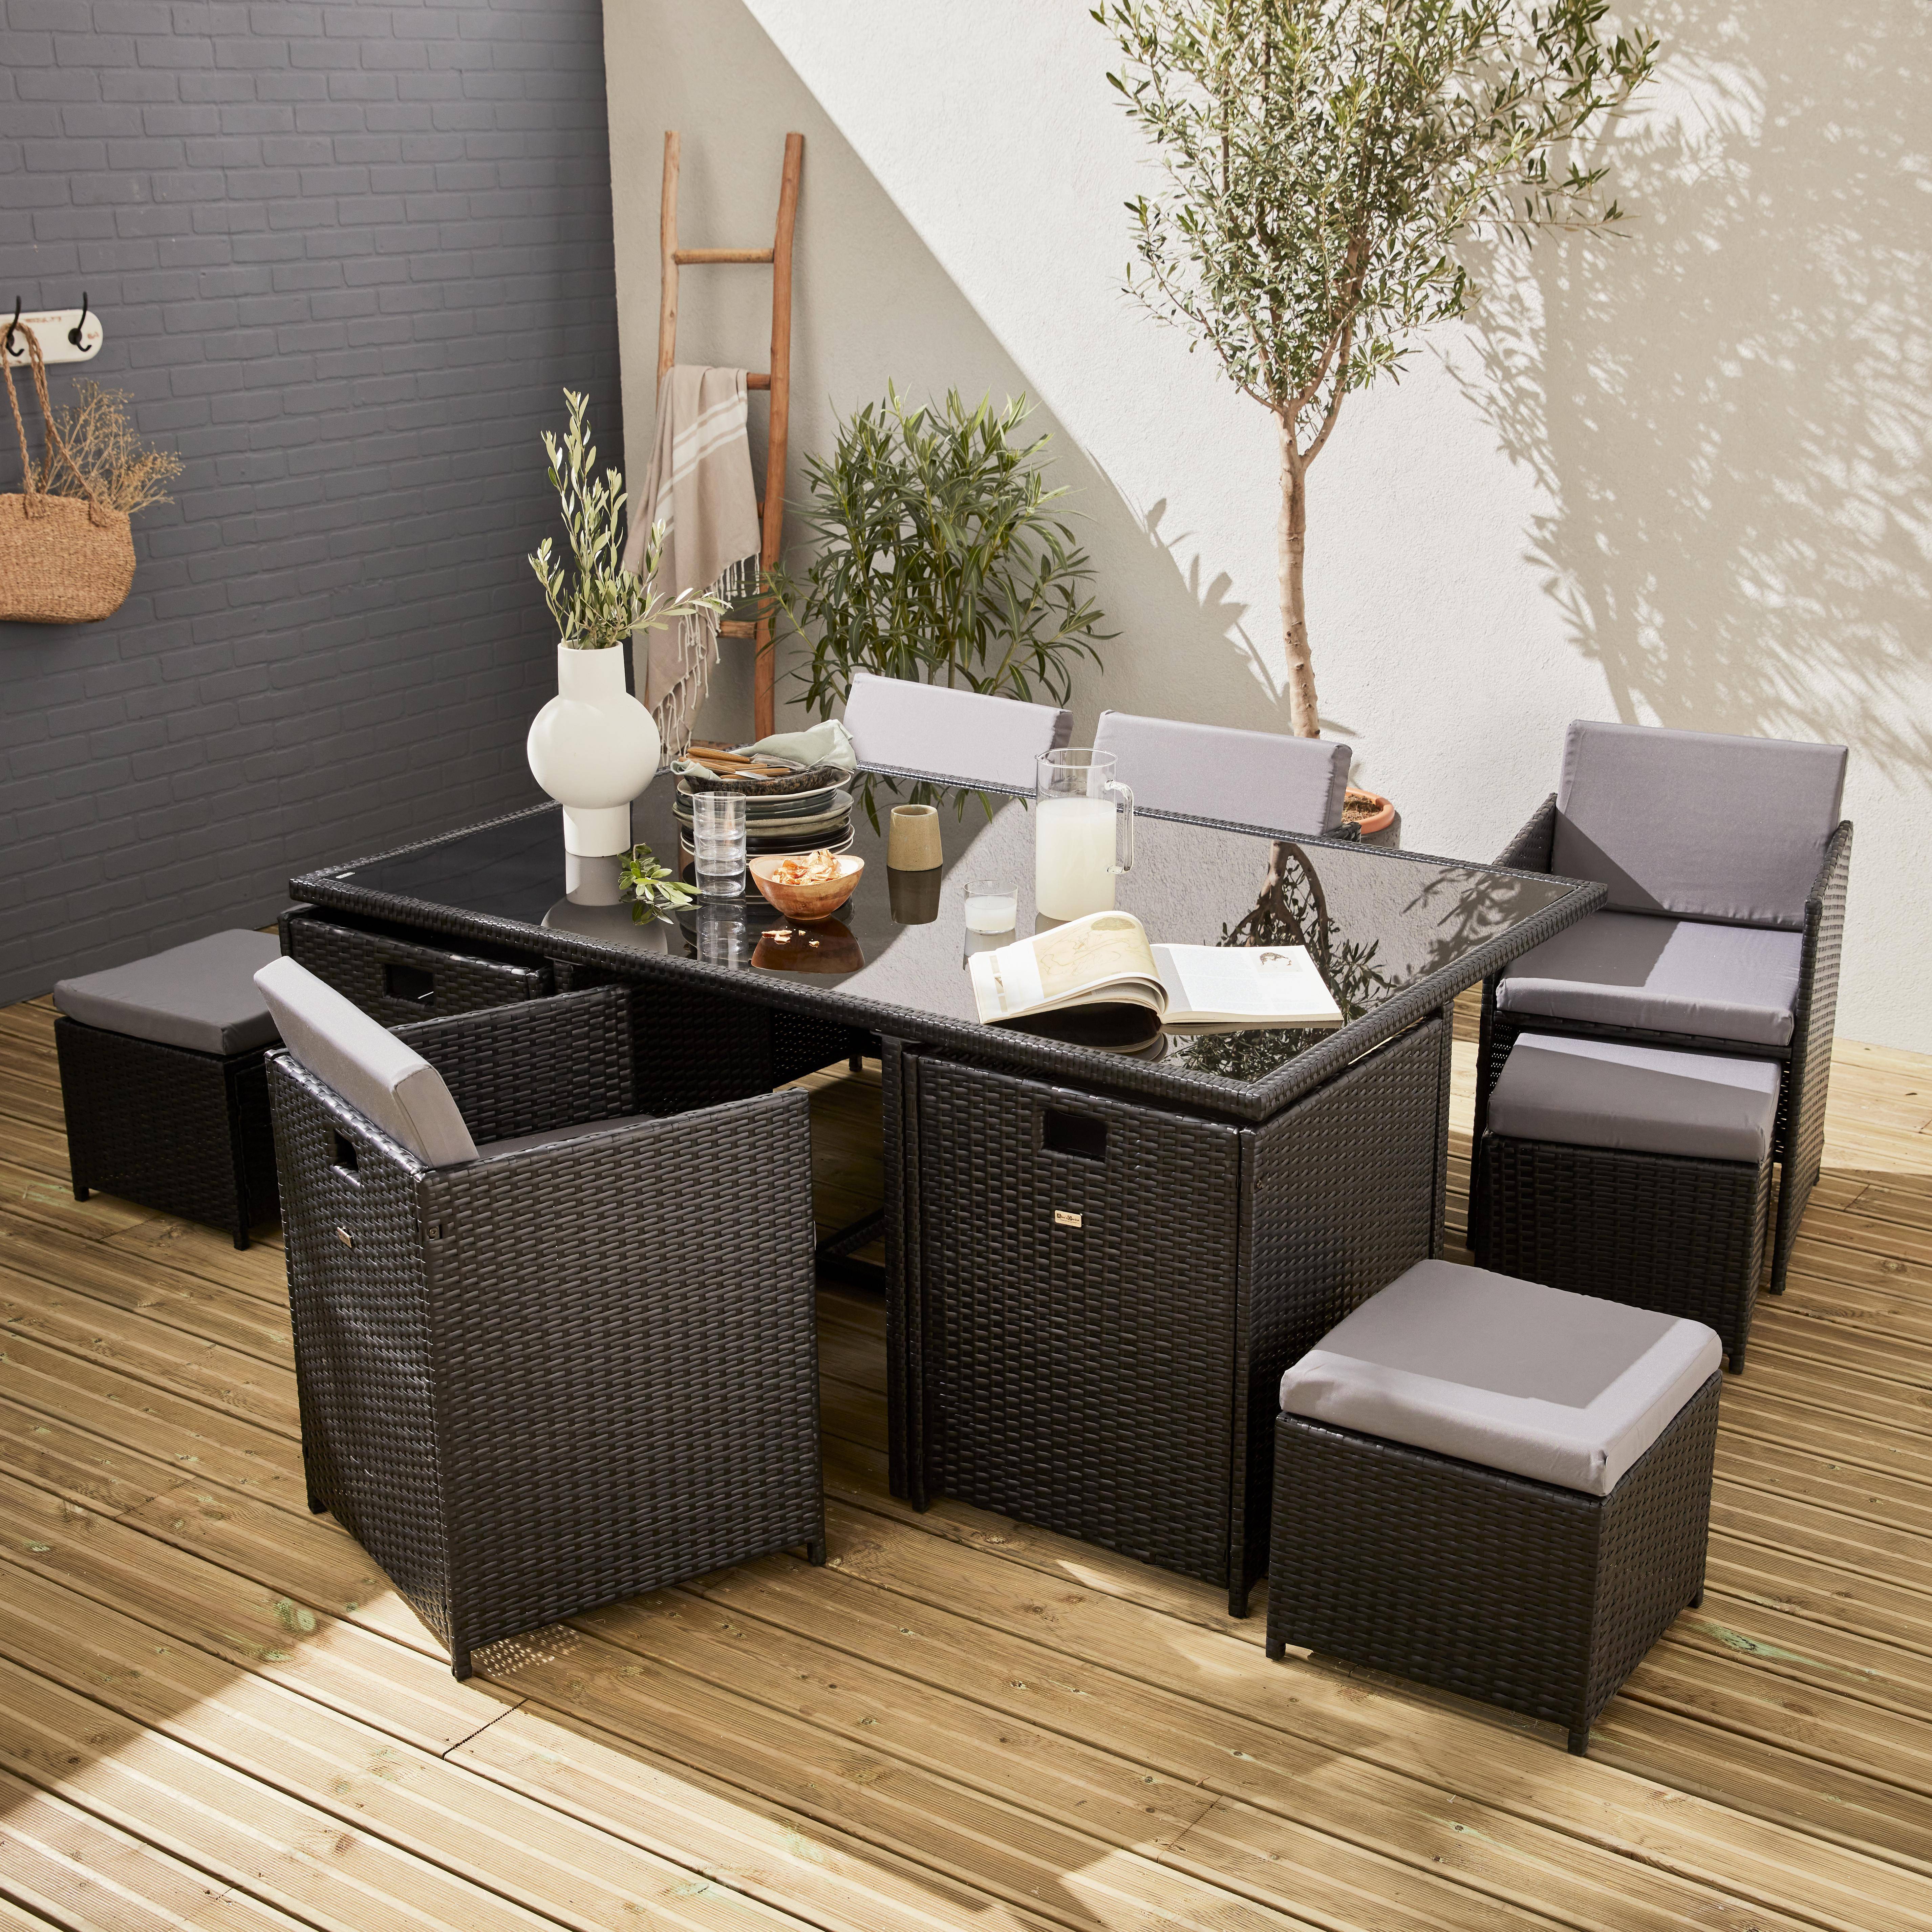 6 to 10-seater rattan cube table set - table, 6 armchairs, 2 footstools - Vabo 10 - Black rattan, Grey cushions,sweeek,Photo1